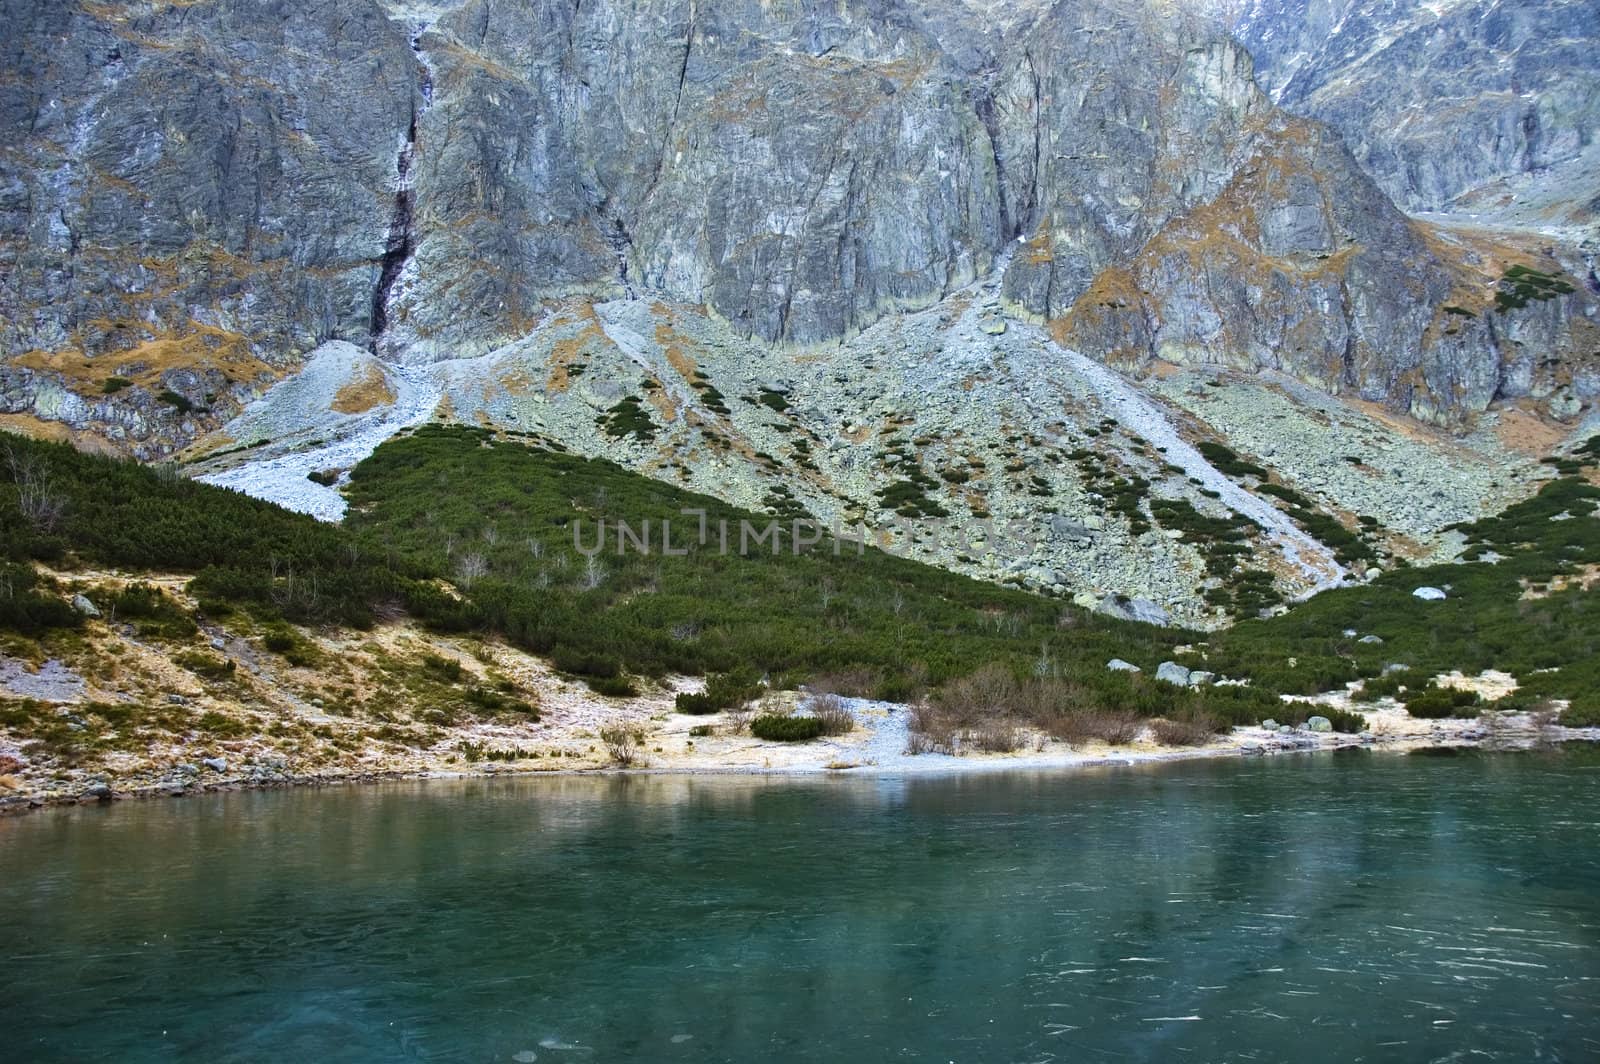 Lake in High Tatras Mountains in Slovakia by Michalowski